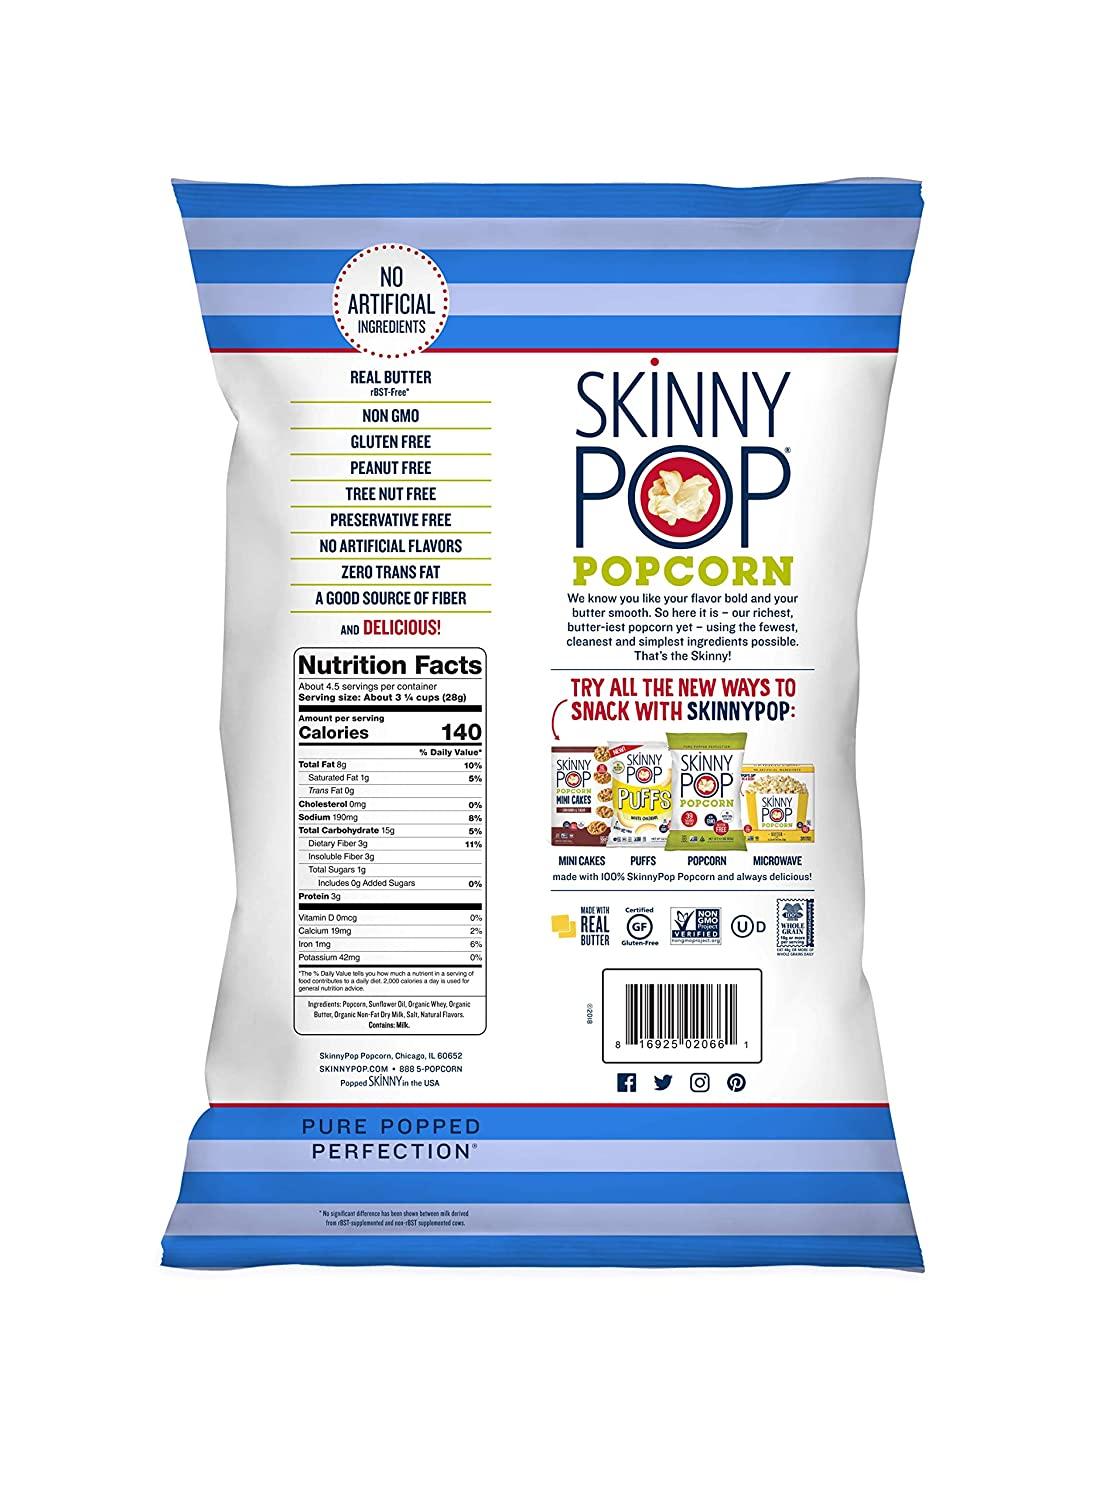 SkinnyPop Butter Popcorn, Gluten Free, Non-GMO, Healthy Popcorn